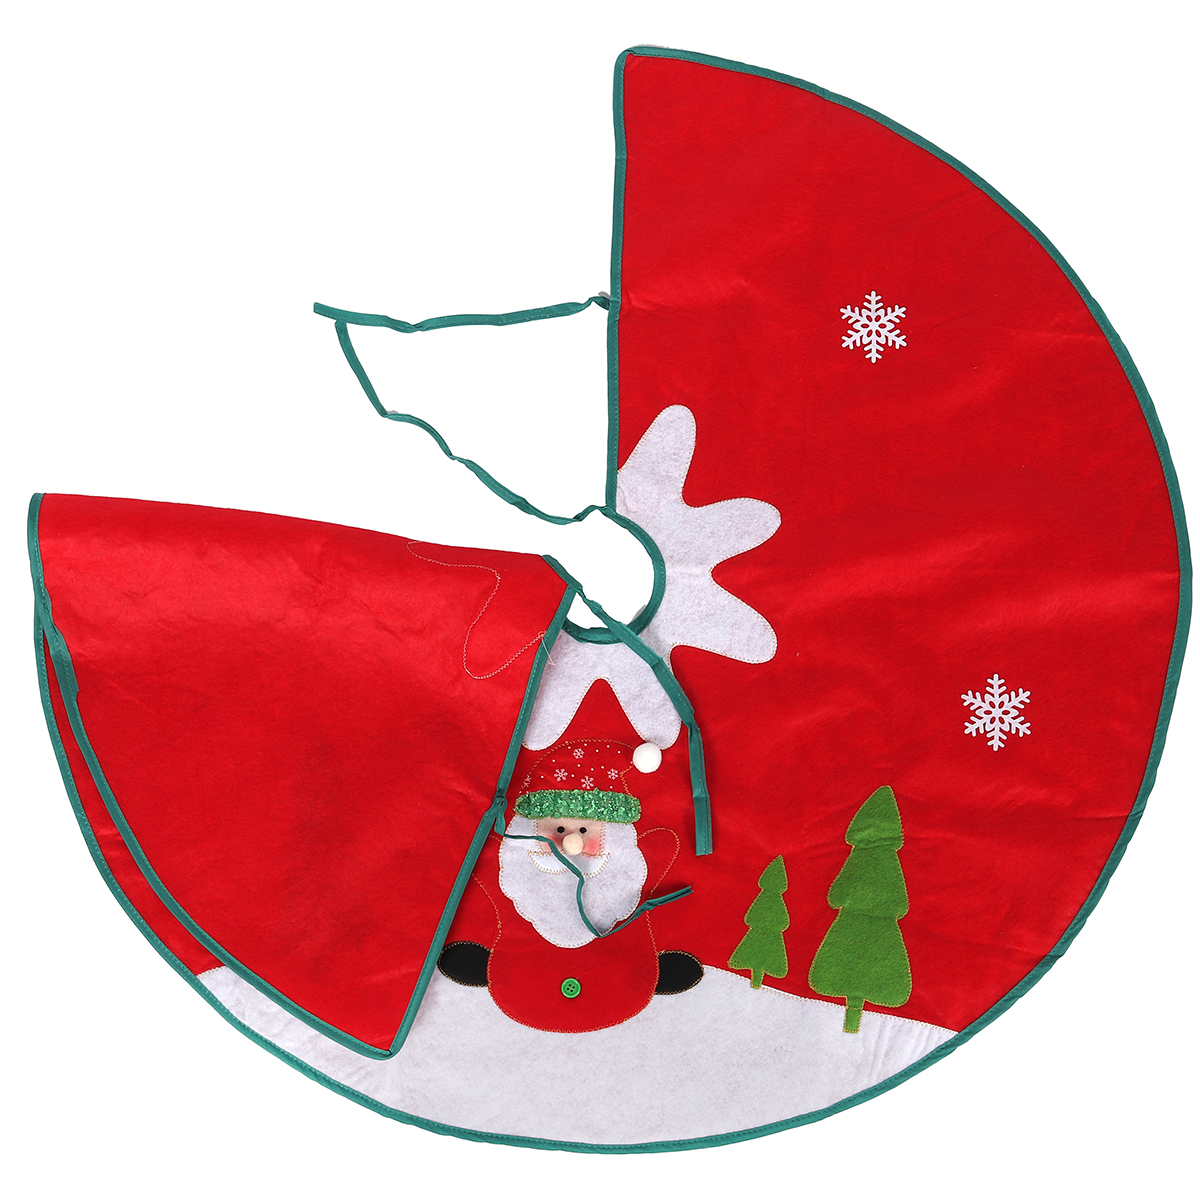 2020-Christmas-Decor-Santa-Claus-Christmas-Tree-Skirt-Aprons-New-Year-Xmas-Tree-Carpet-Foot-Cover-fo-1770951-4